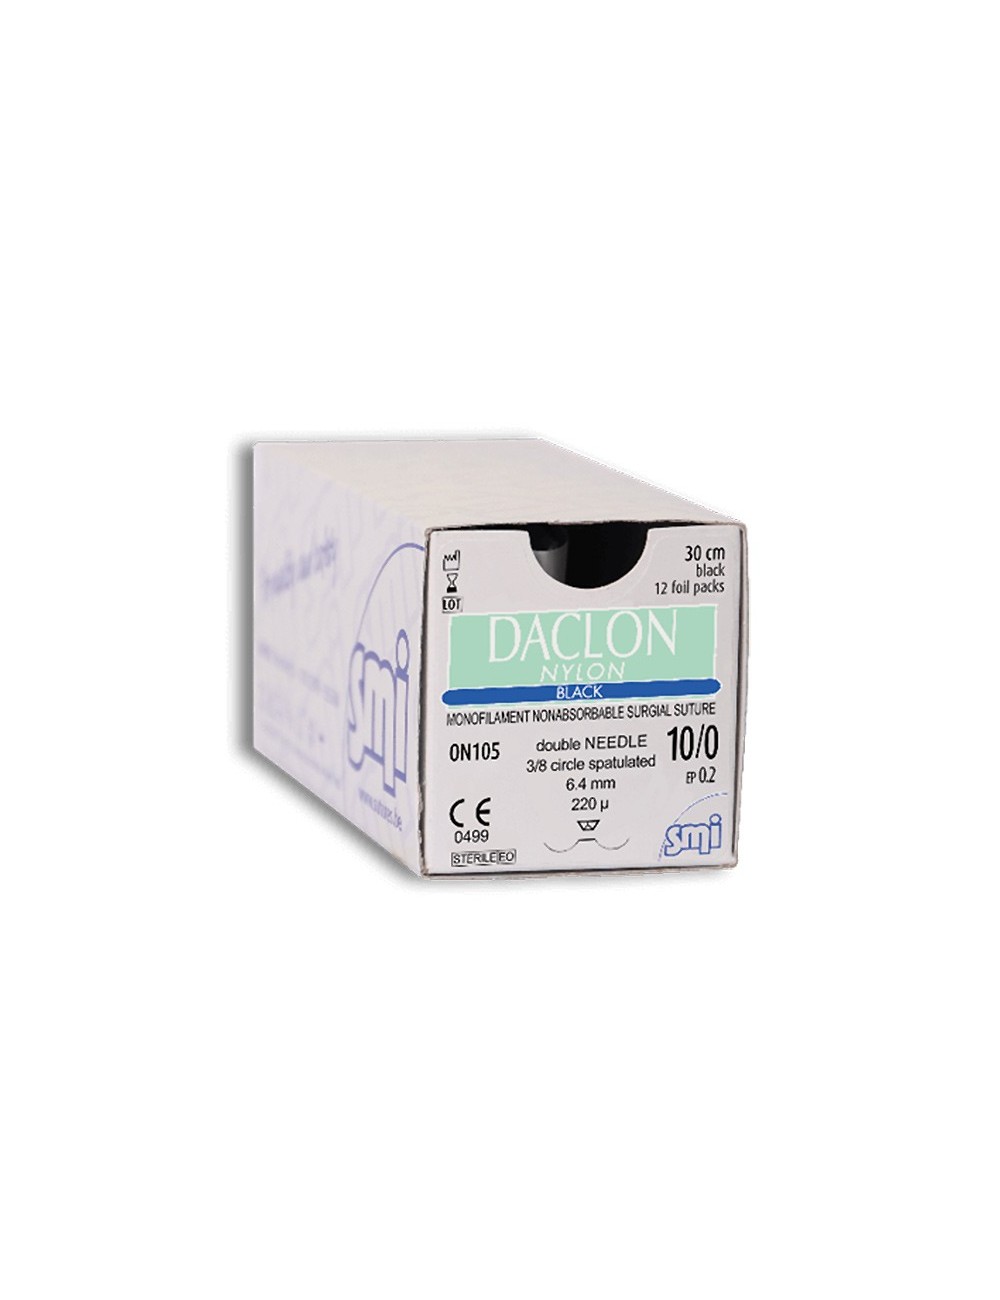 DACLON NYLON MONOFIL DEC.2 (3/0) PT 3/8 19MM 75CM (X 12)